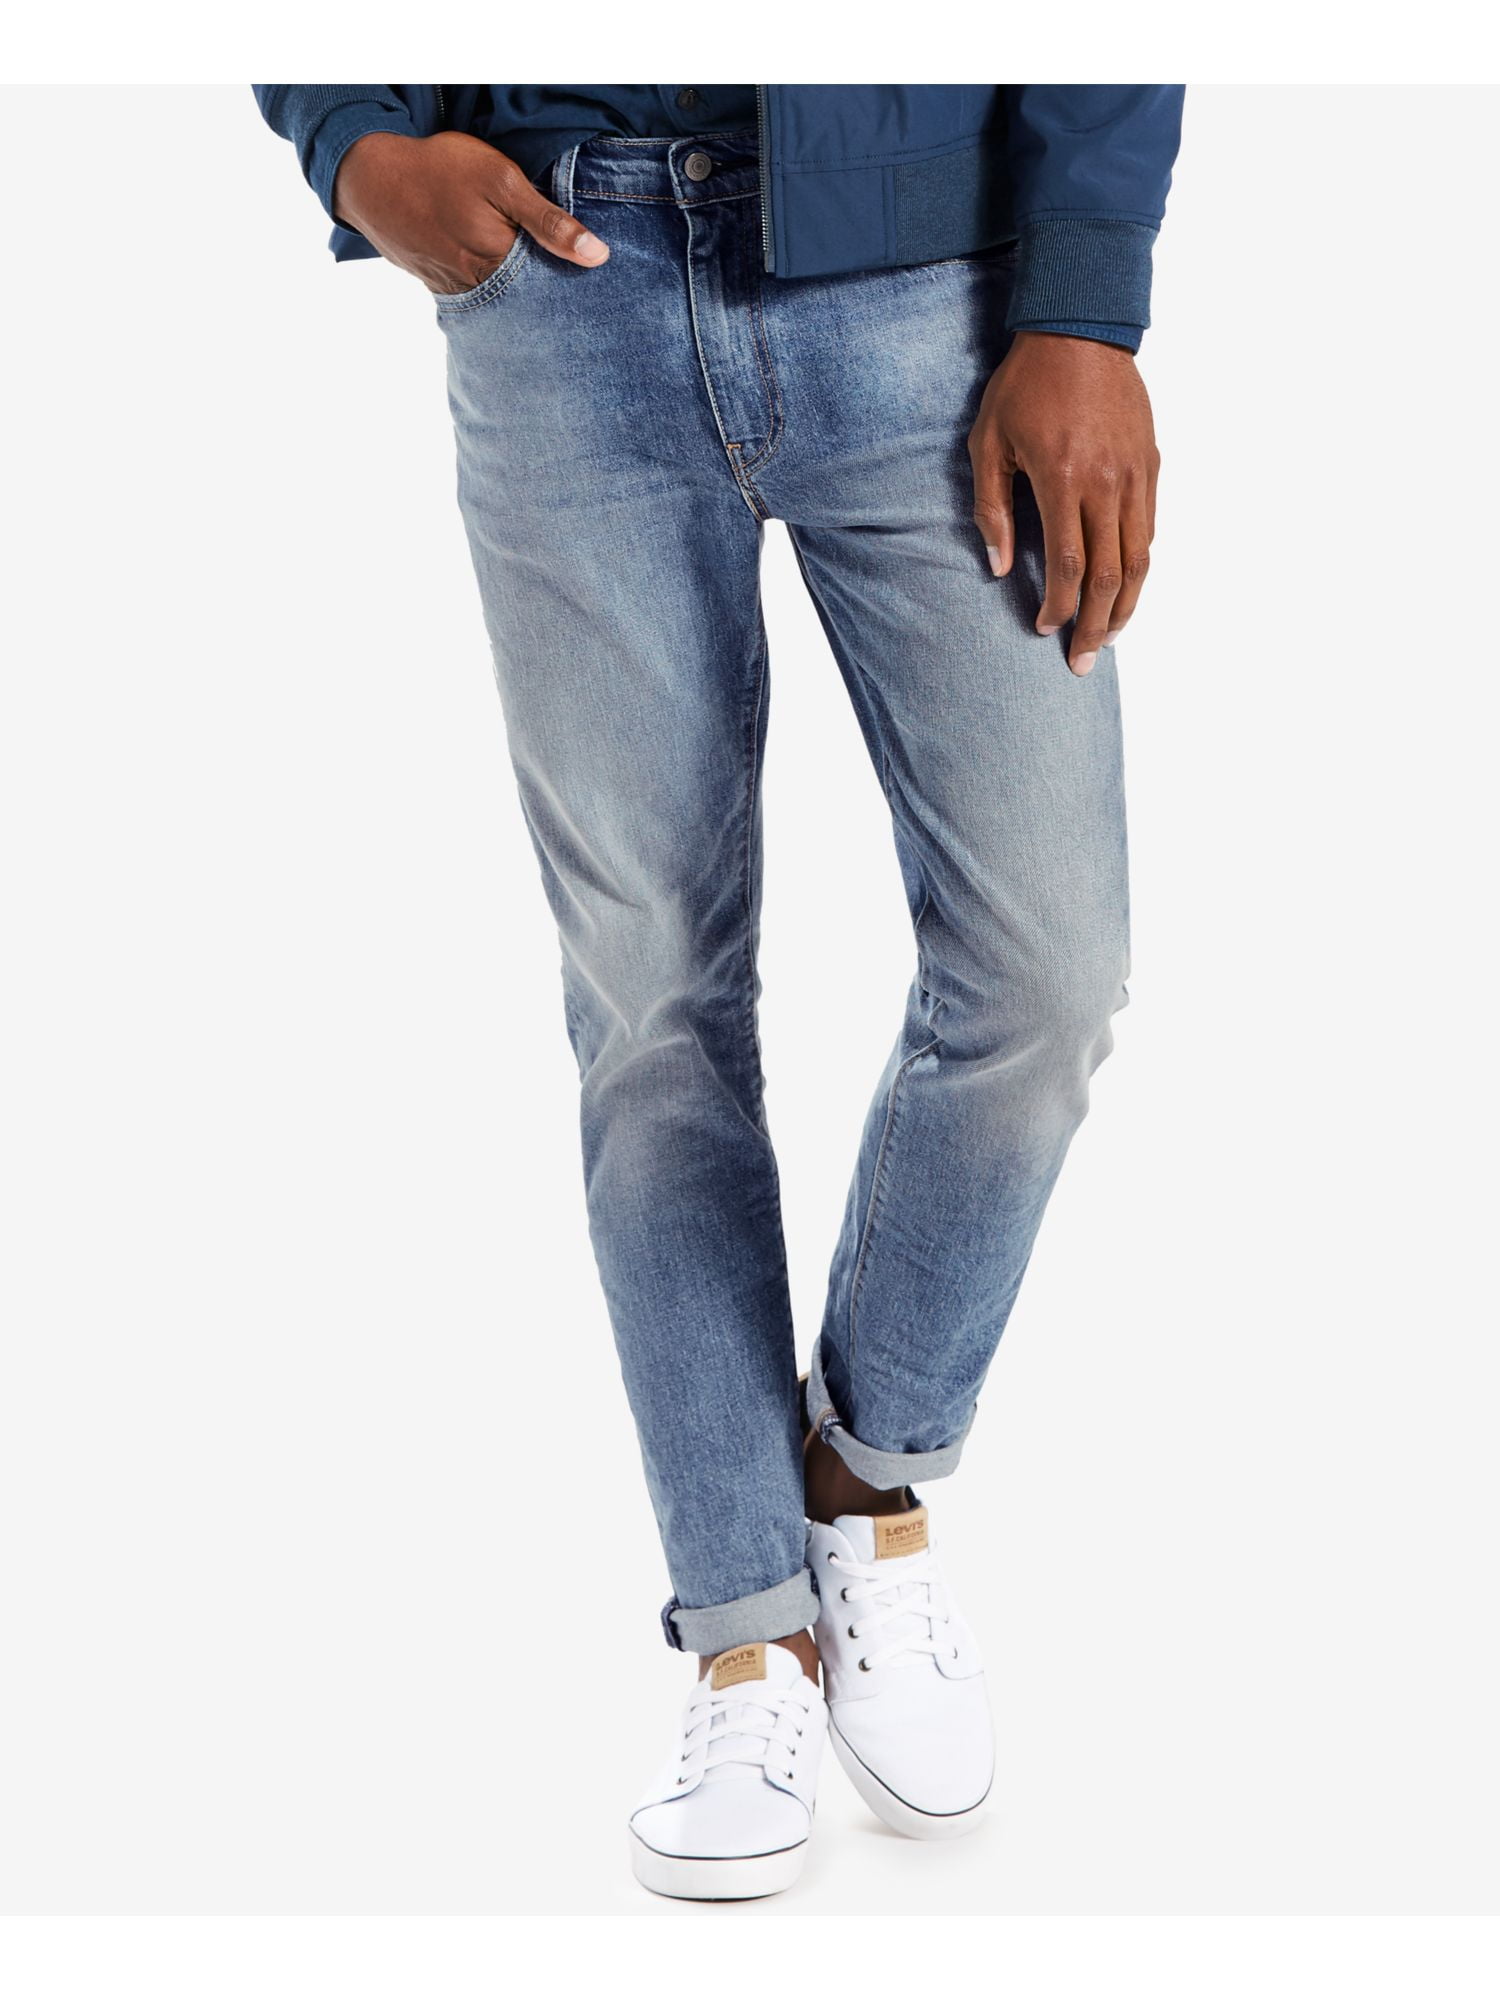 Levi's SIN CITY-WATERLESS Men's 512 Slim Taper Fit Stretch Jeans, US 33x34  